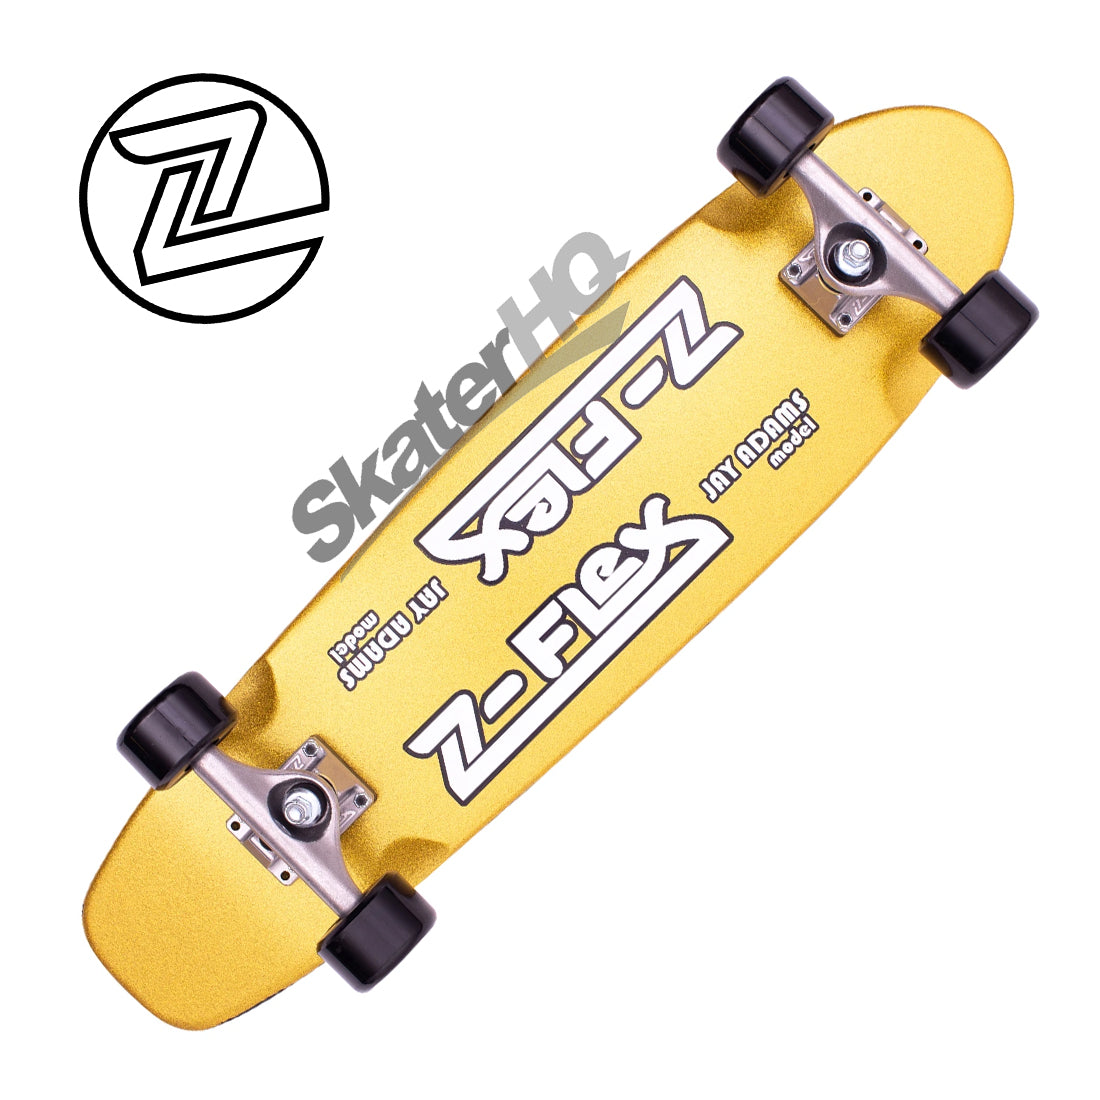 Z-Flex Jay Adams 29 Metal Flake Cruiser - Gold Skateboard Compl Cruisers